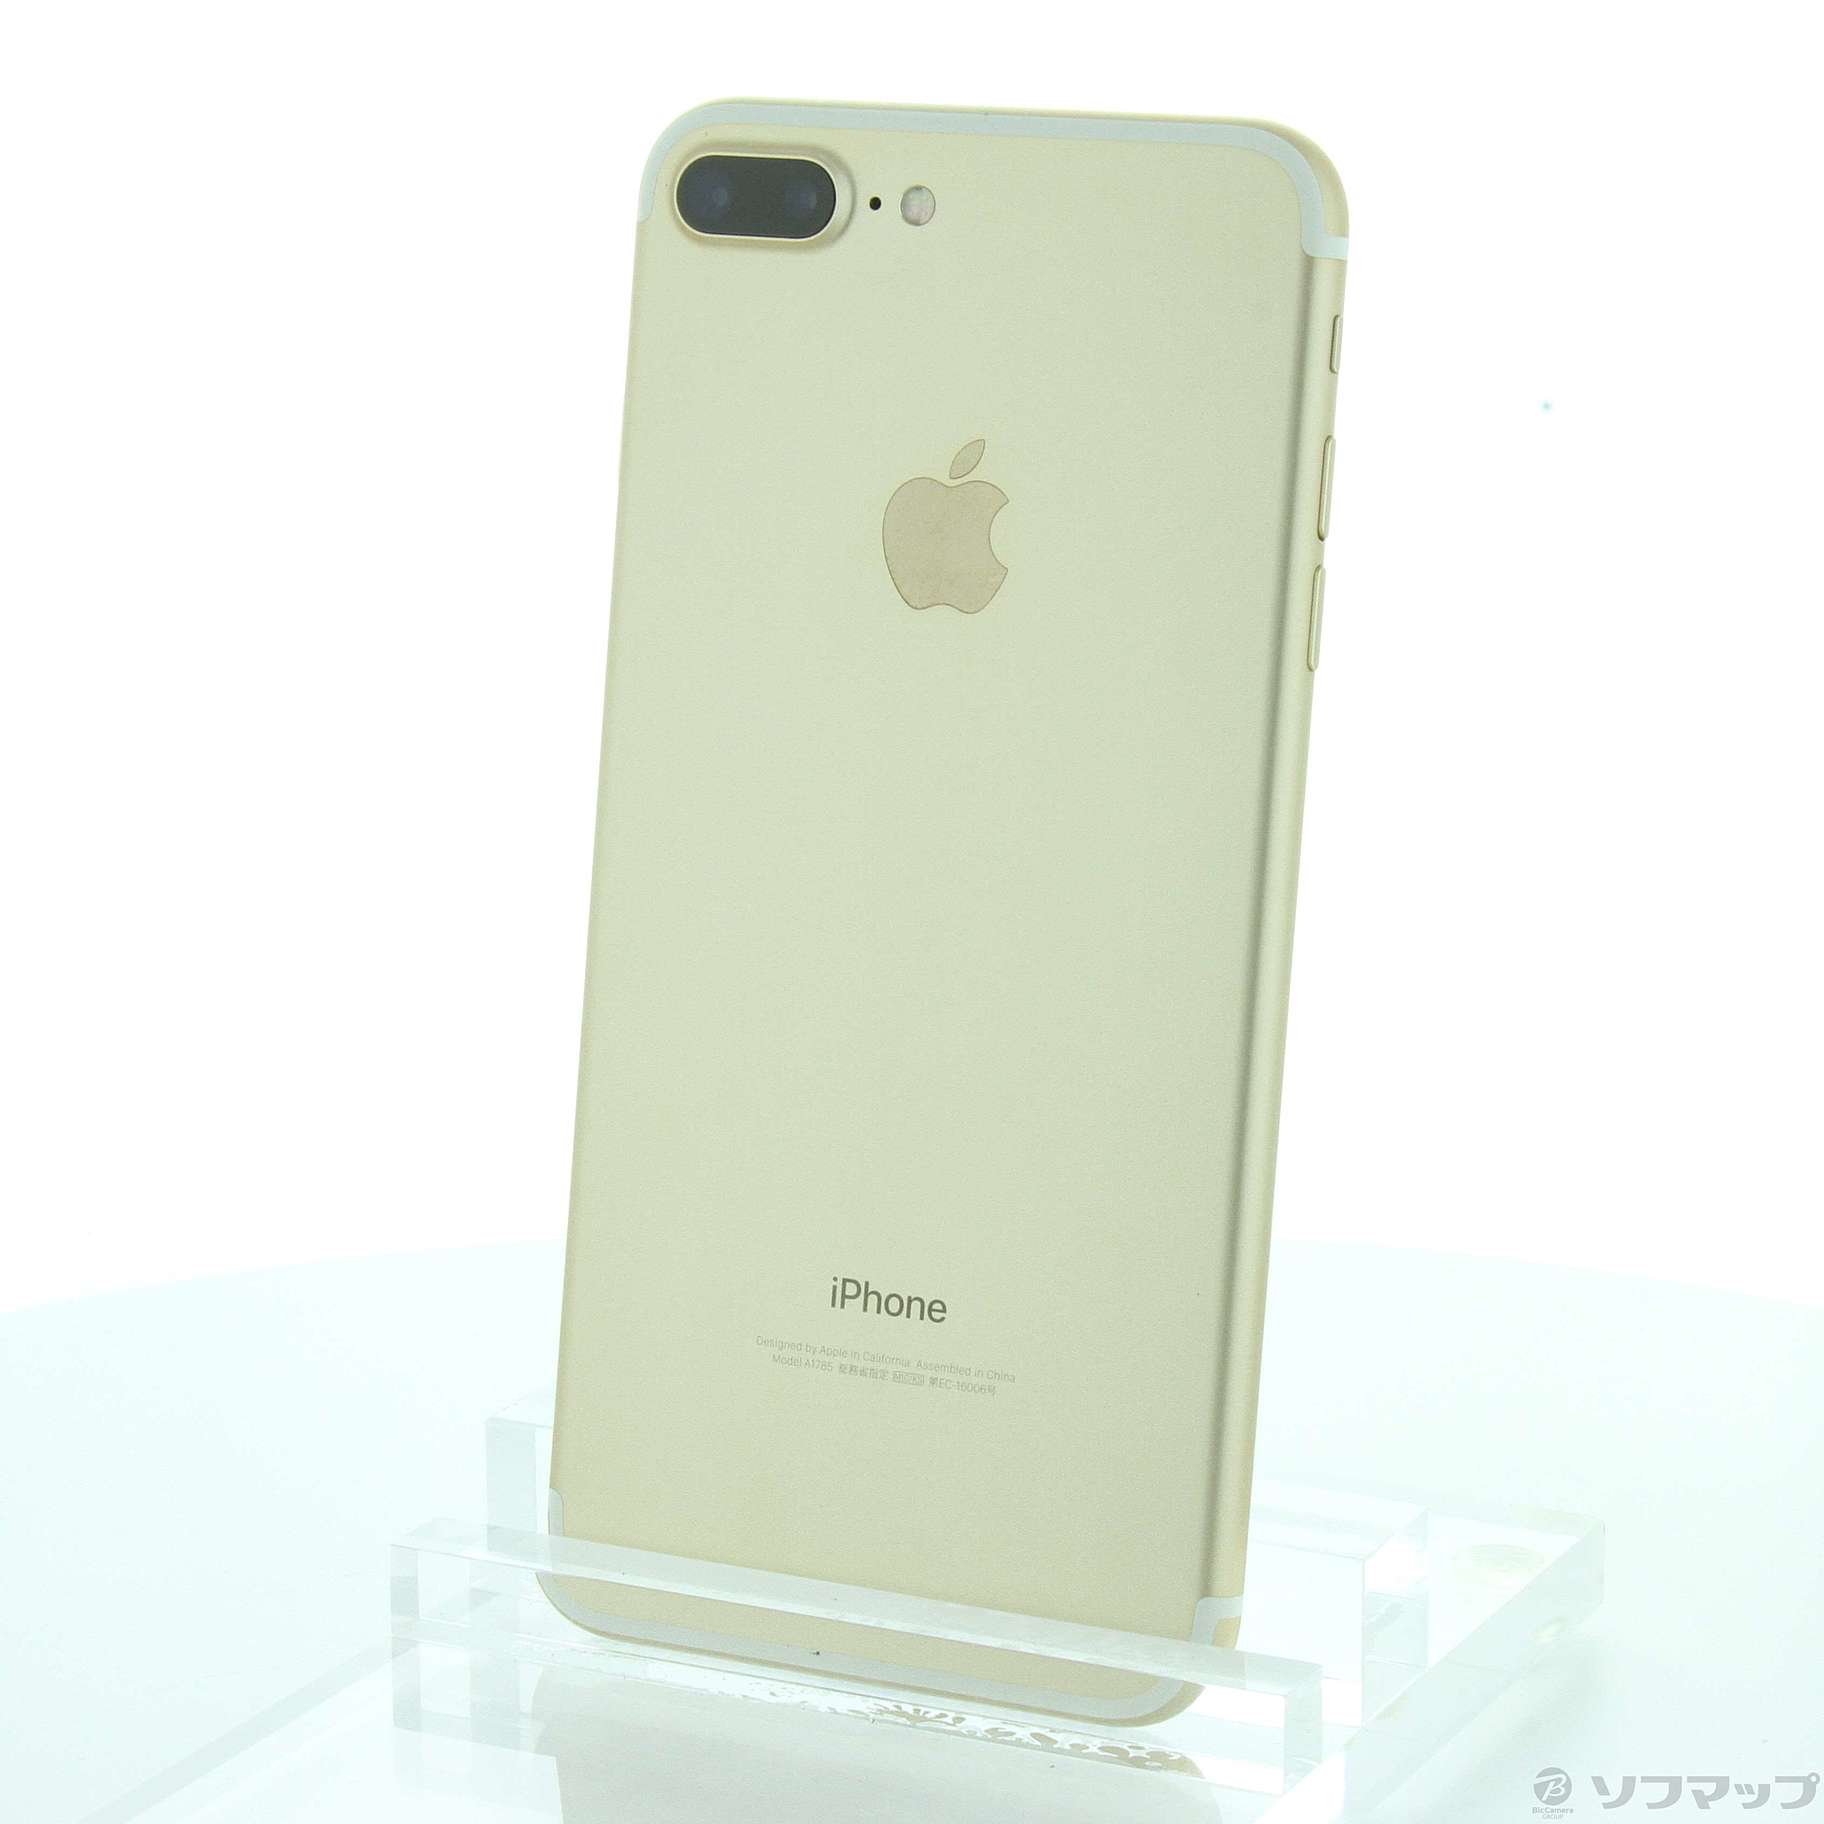 iPhone 7 Plus Gold 128 GB SIMフリー - matsudo-yeg.jp